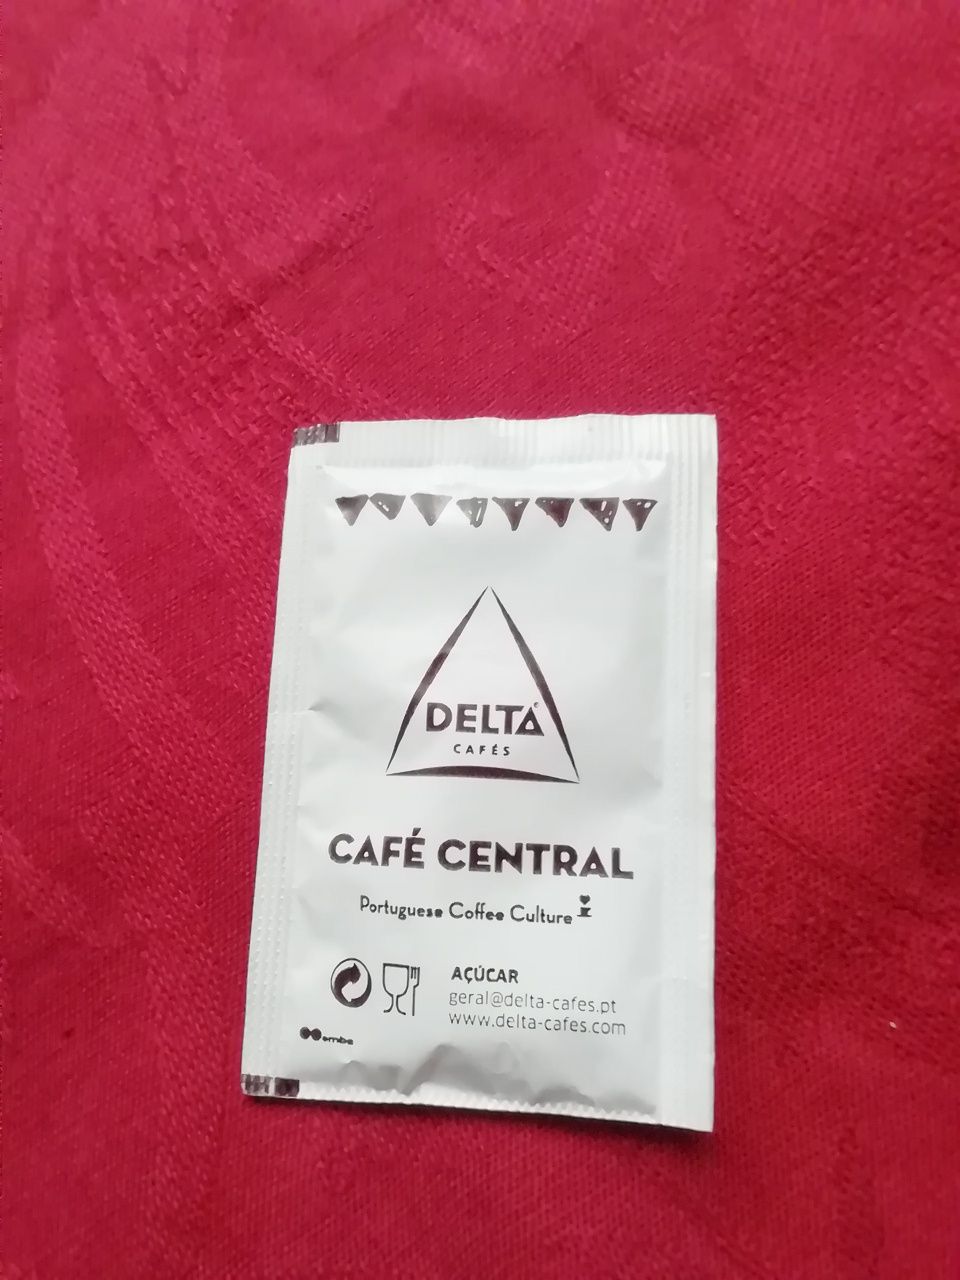 Pacote de açúcar Delta - Café Central, novo